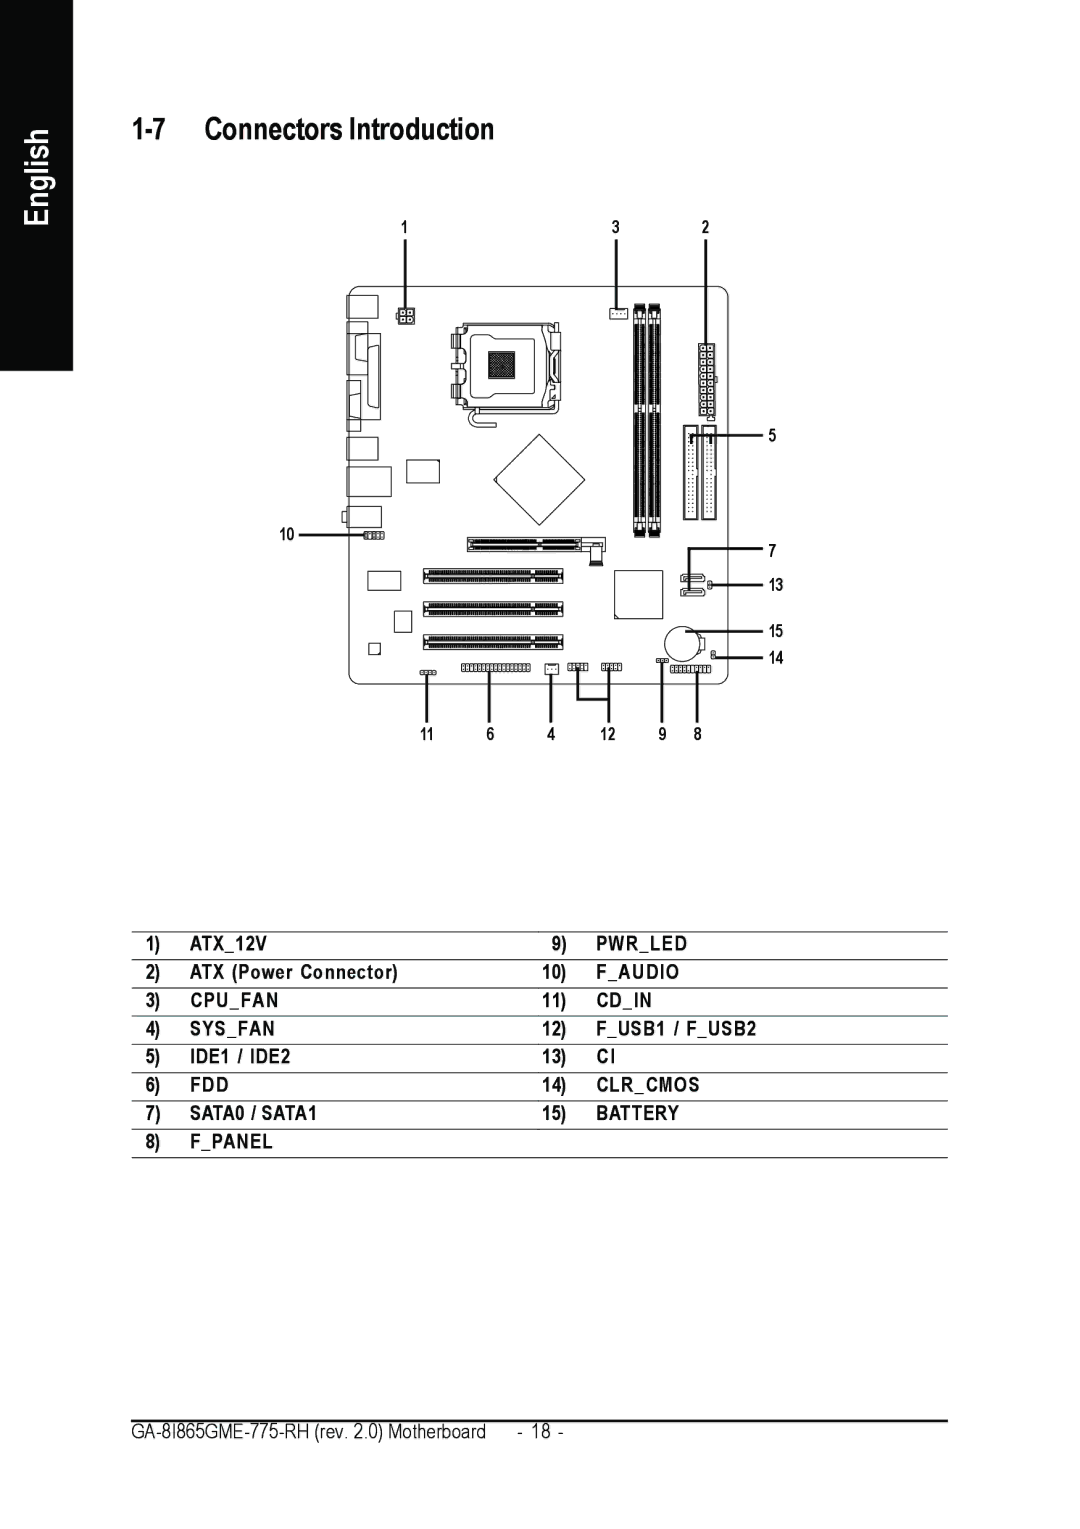 Gigabyte GA-8I865GME-775-RH user manual Connectors Introduction 